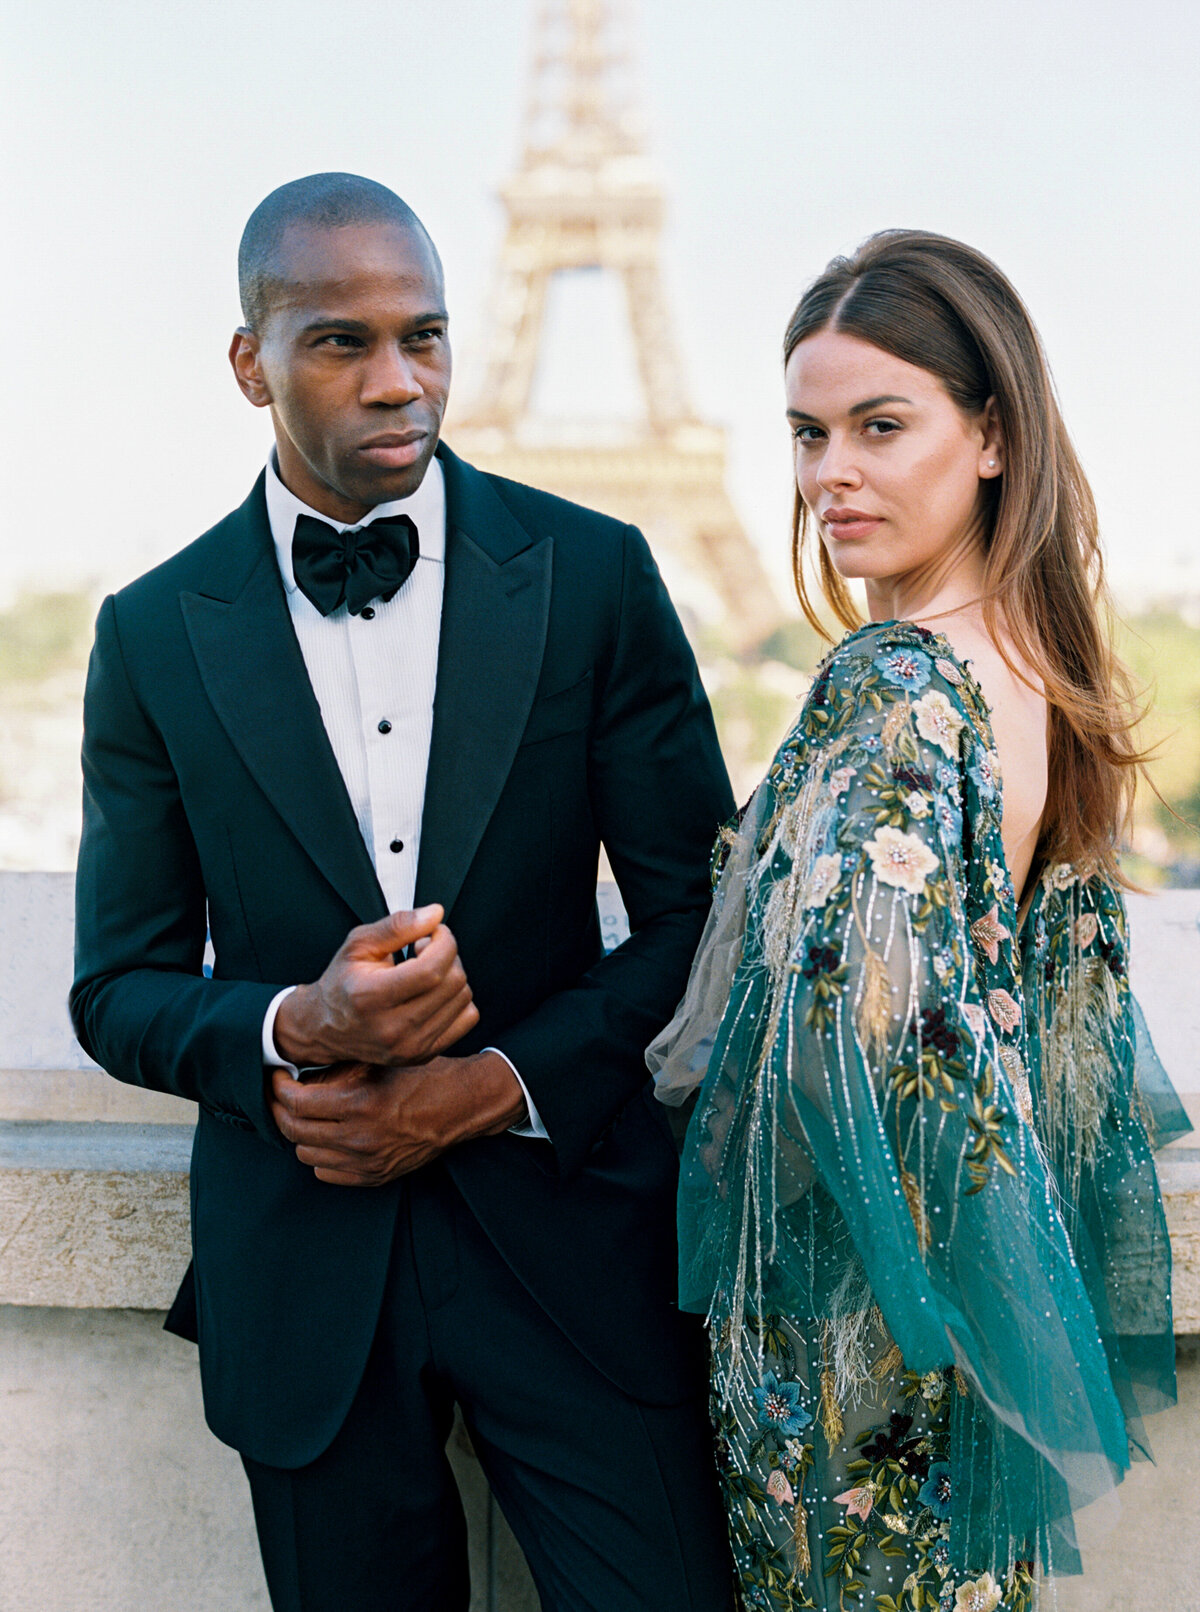 Paris Eiffel Tower Wedding Photography Shooting - Janna Brown